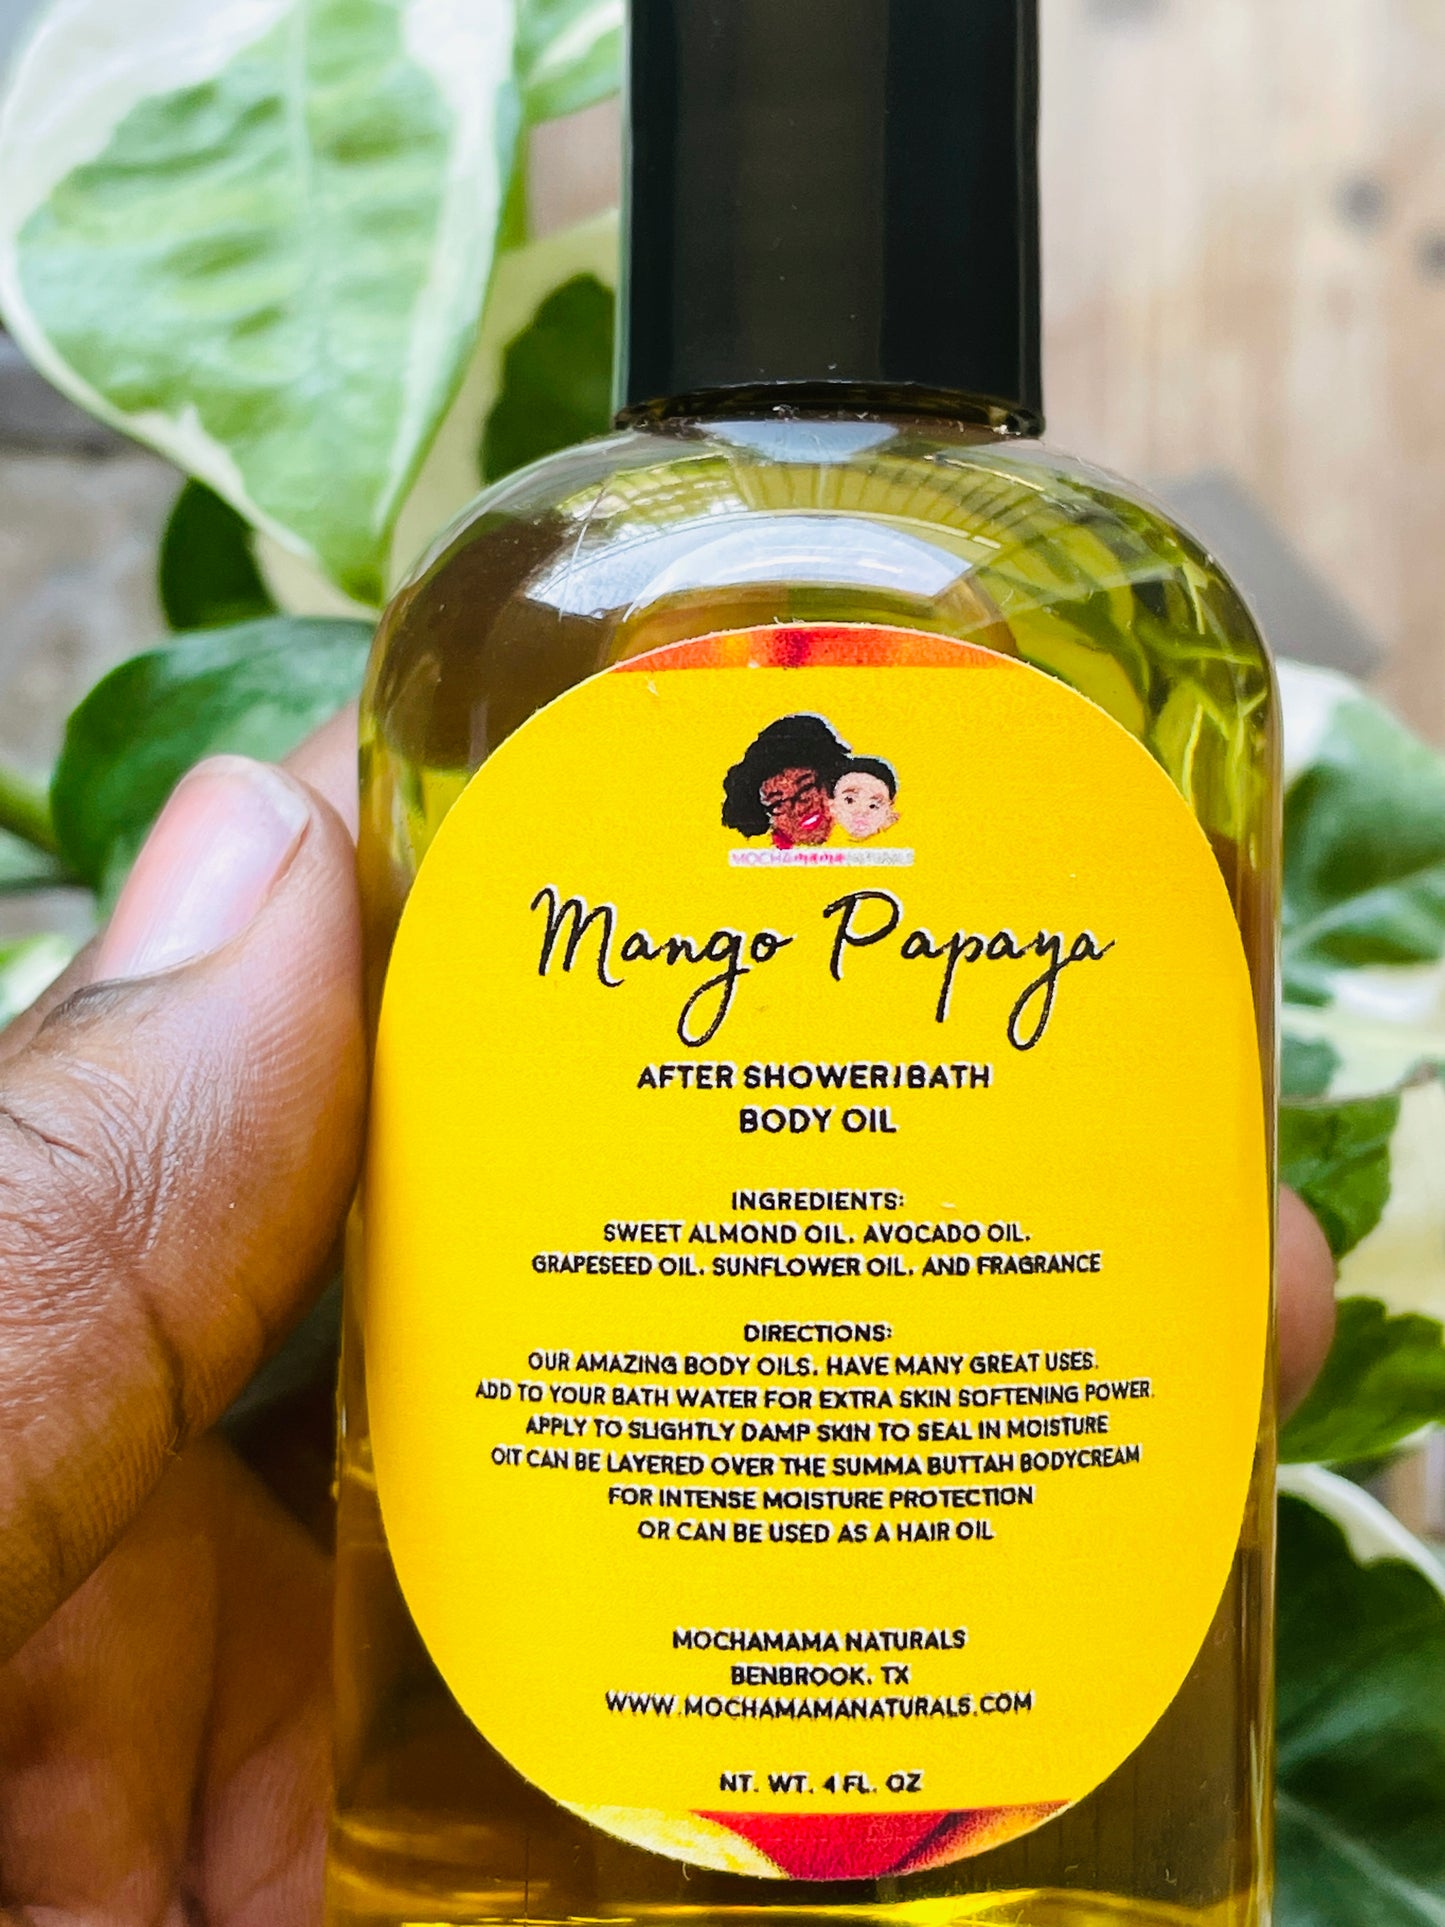 Mango Papaya After Shower/Bath Body Oil